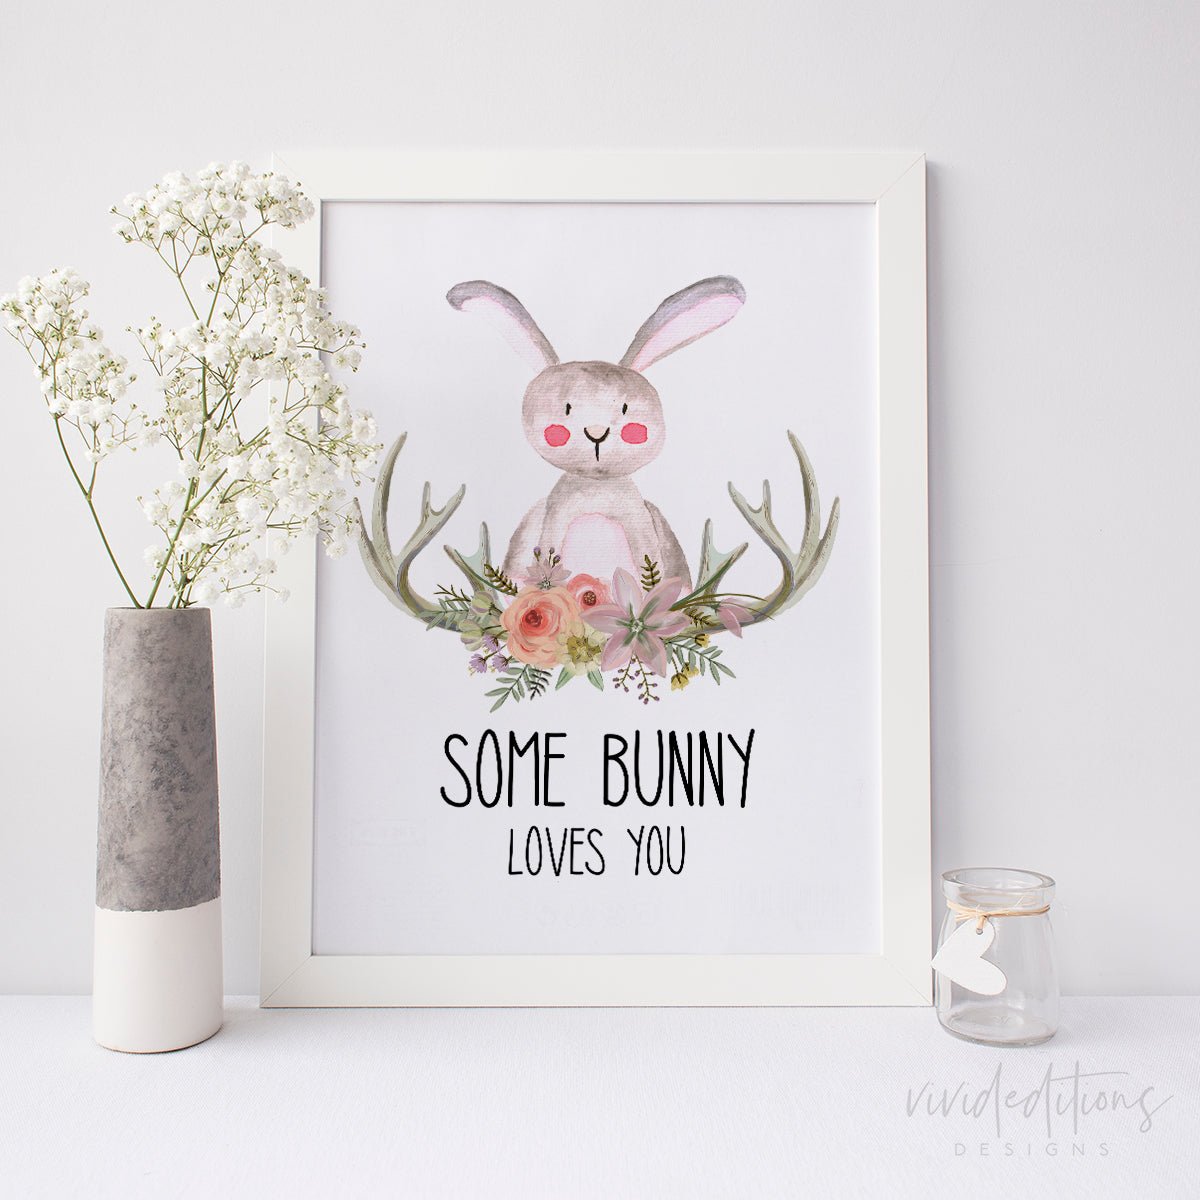 Some Bunny Loves You Watercolor Art Print Print - VividEditions